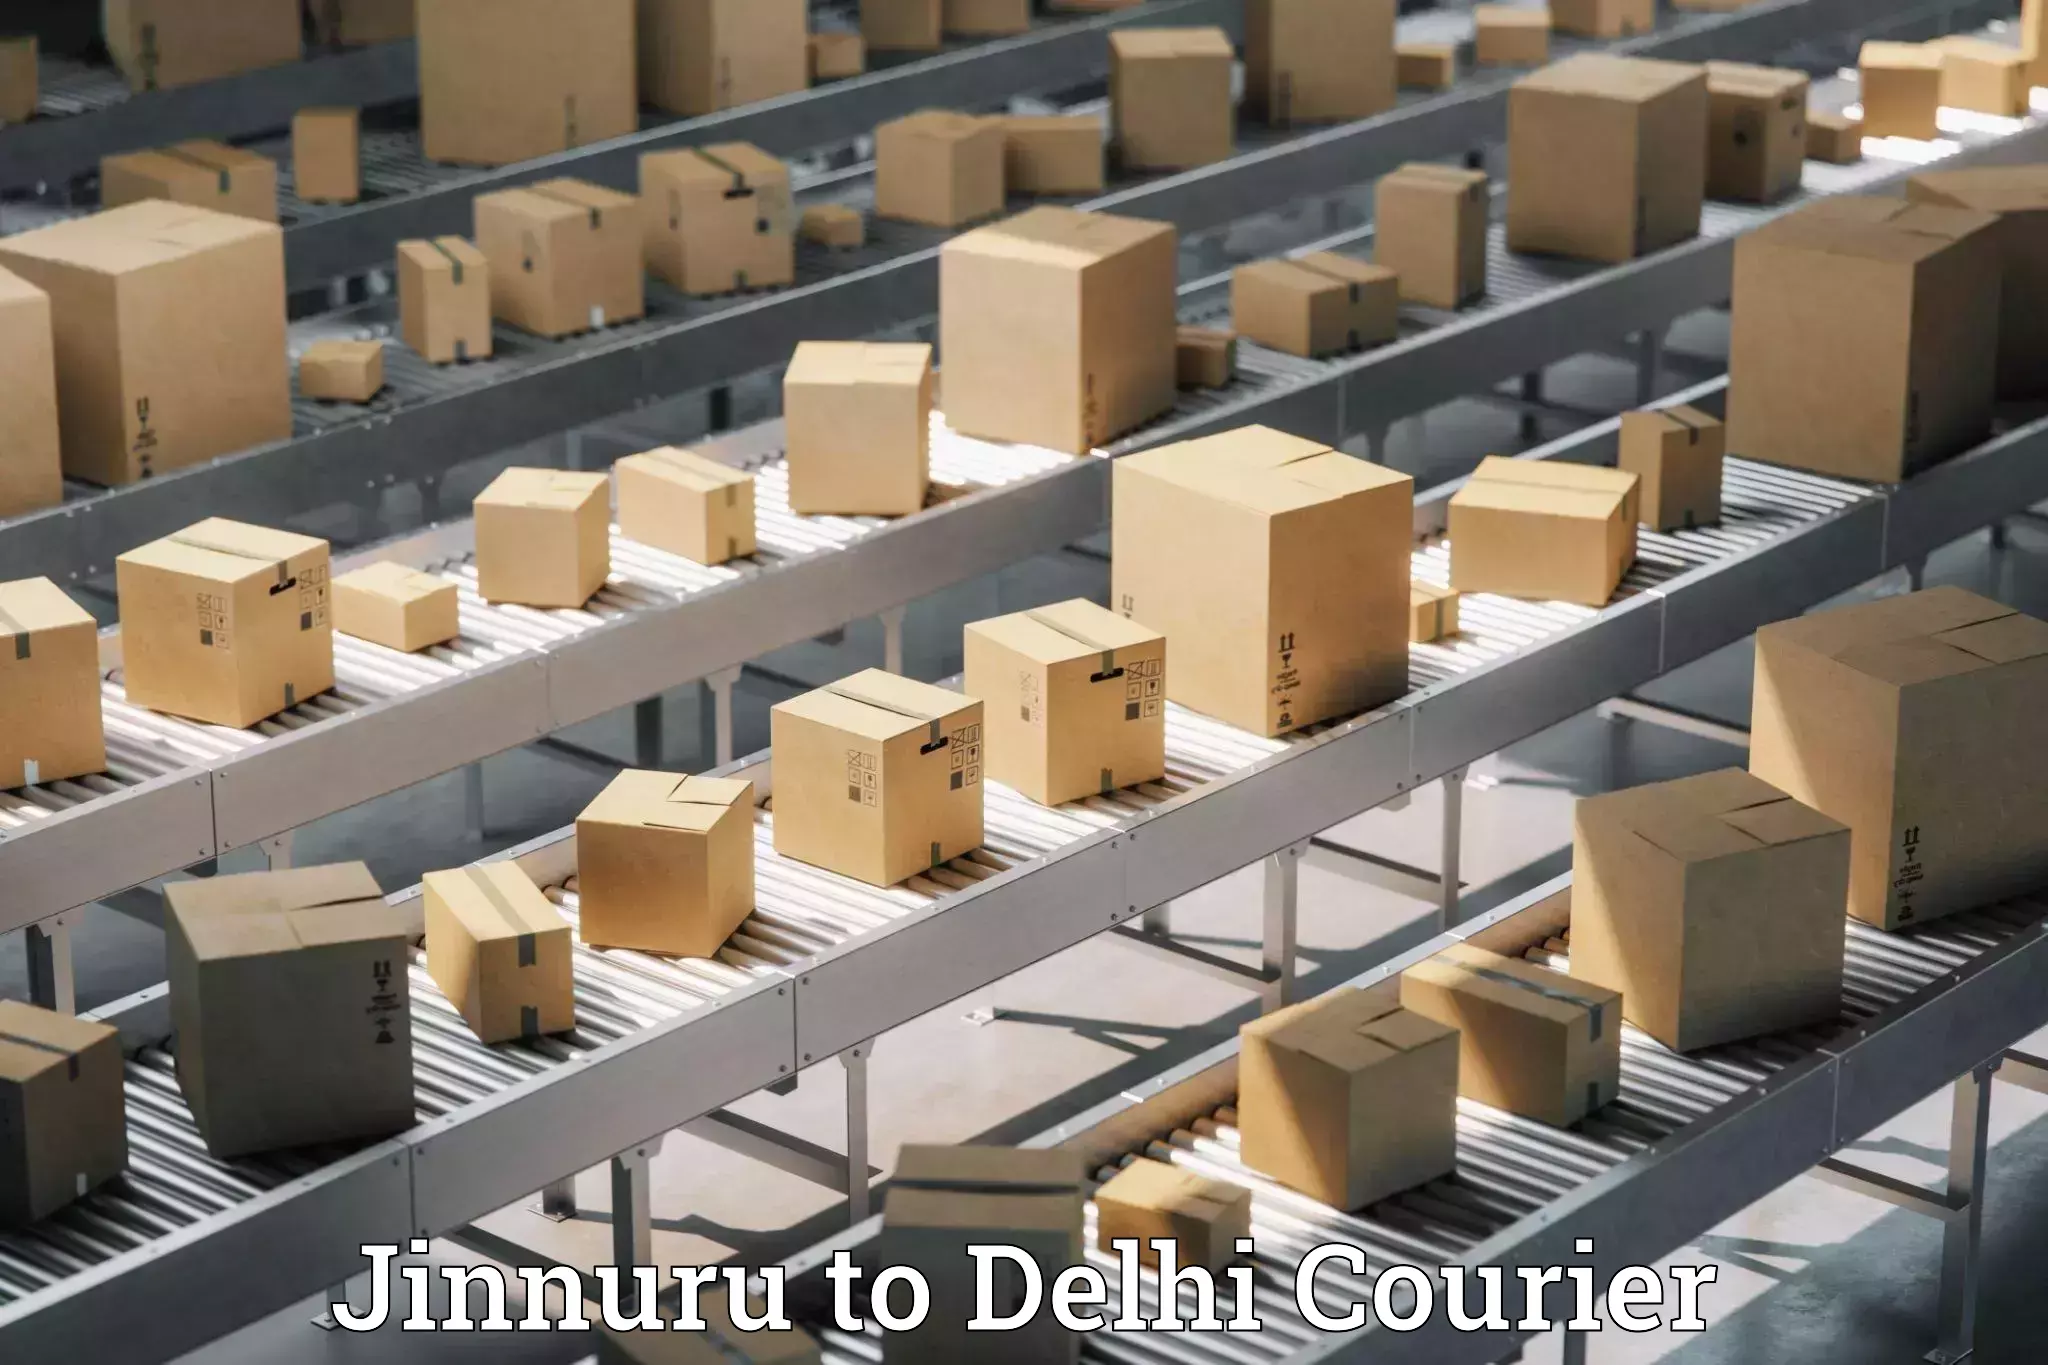 Next-day delivery options Jinnuru to University of Delhi